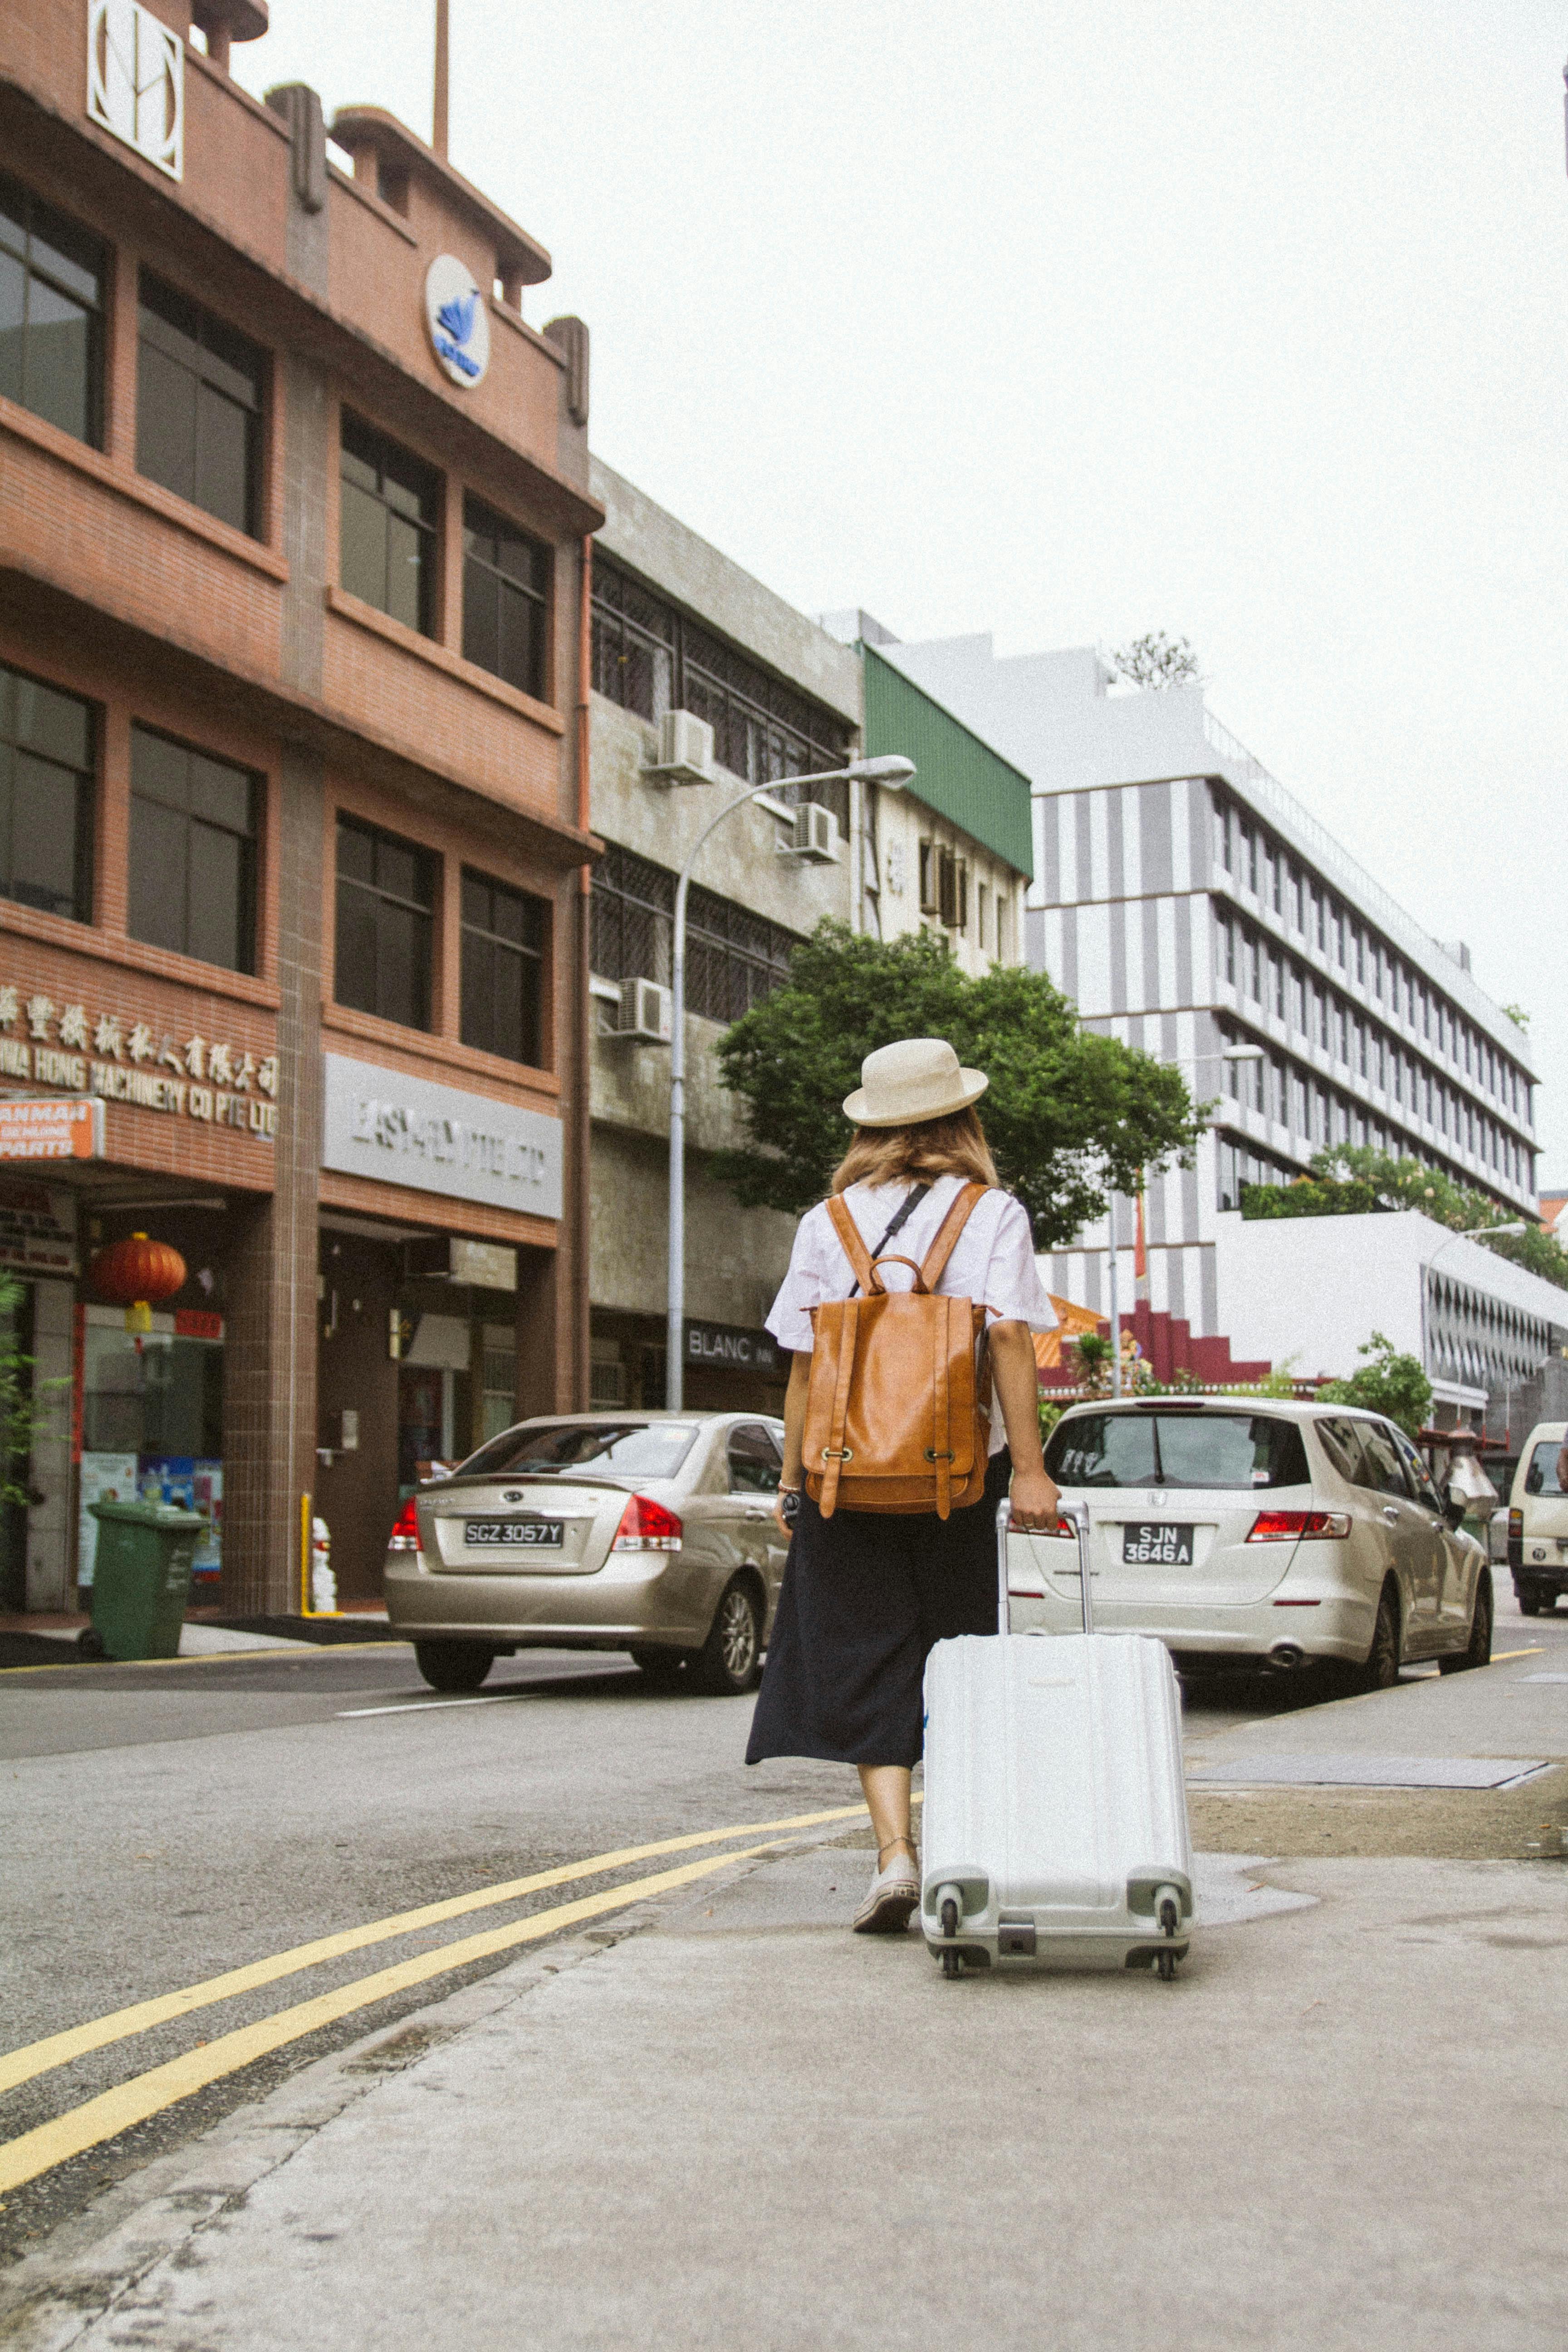 A woman walking away pulling luggage | Source: Pexels